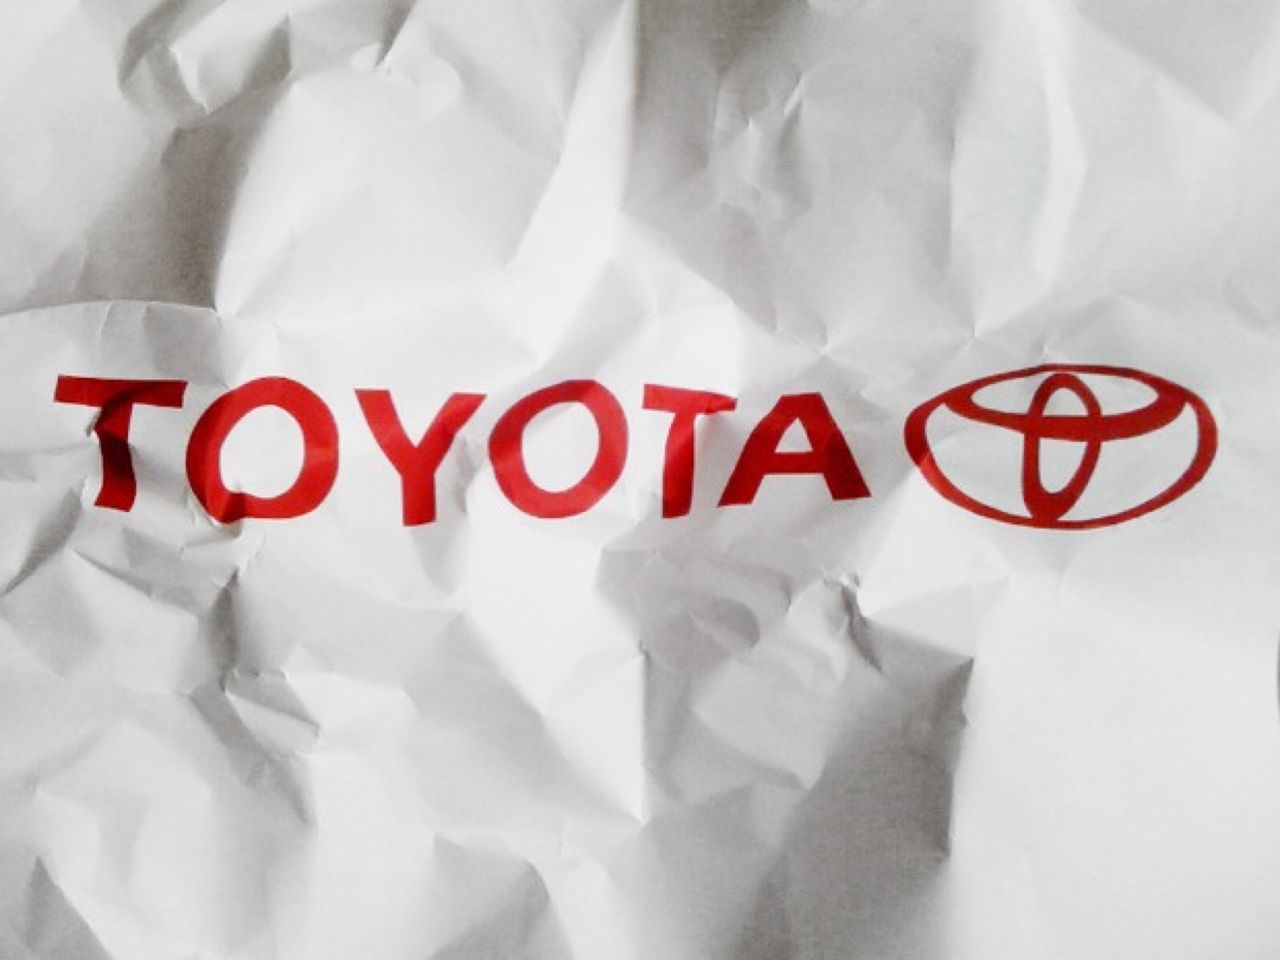 Toyota brand crisis management